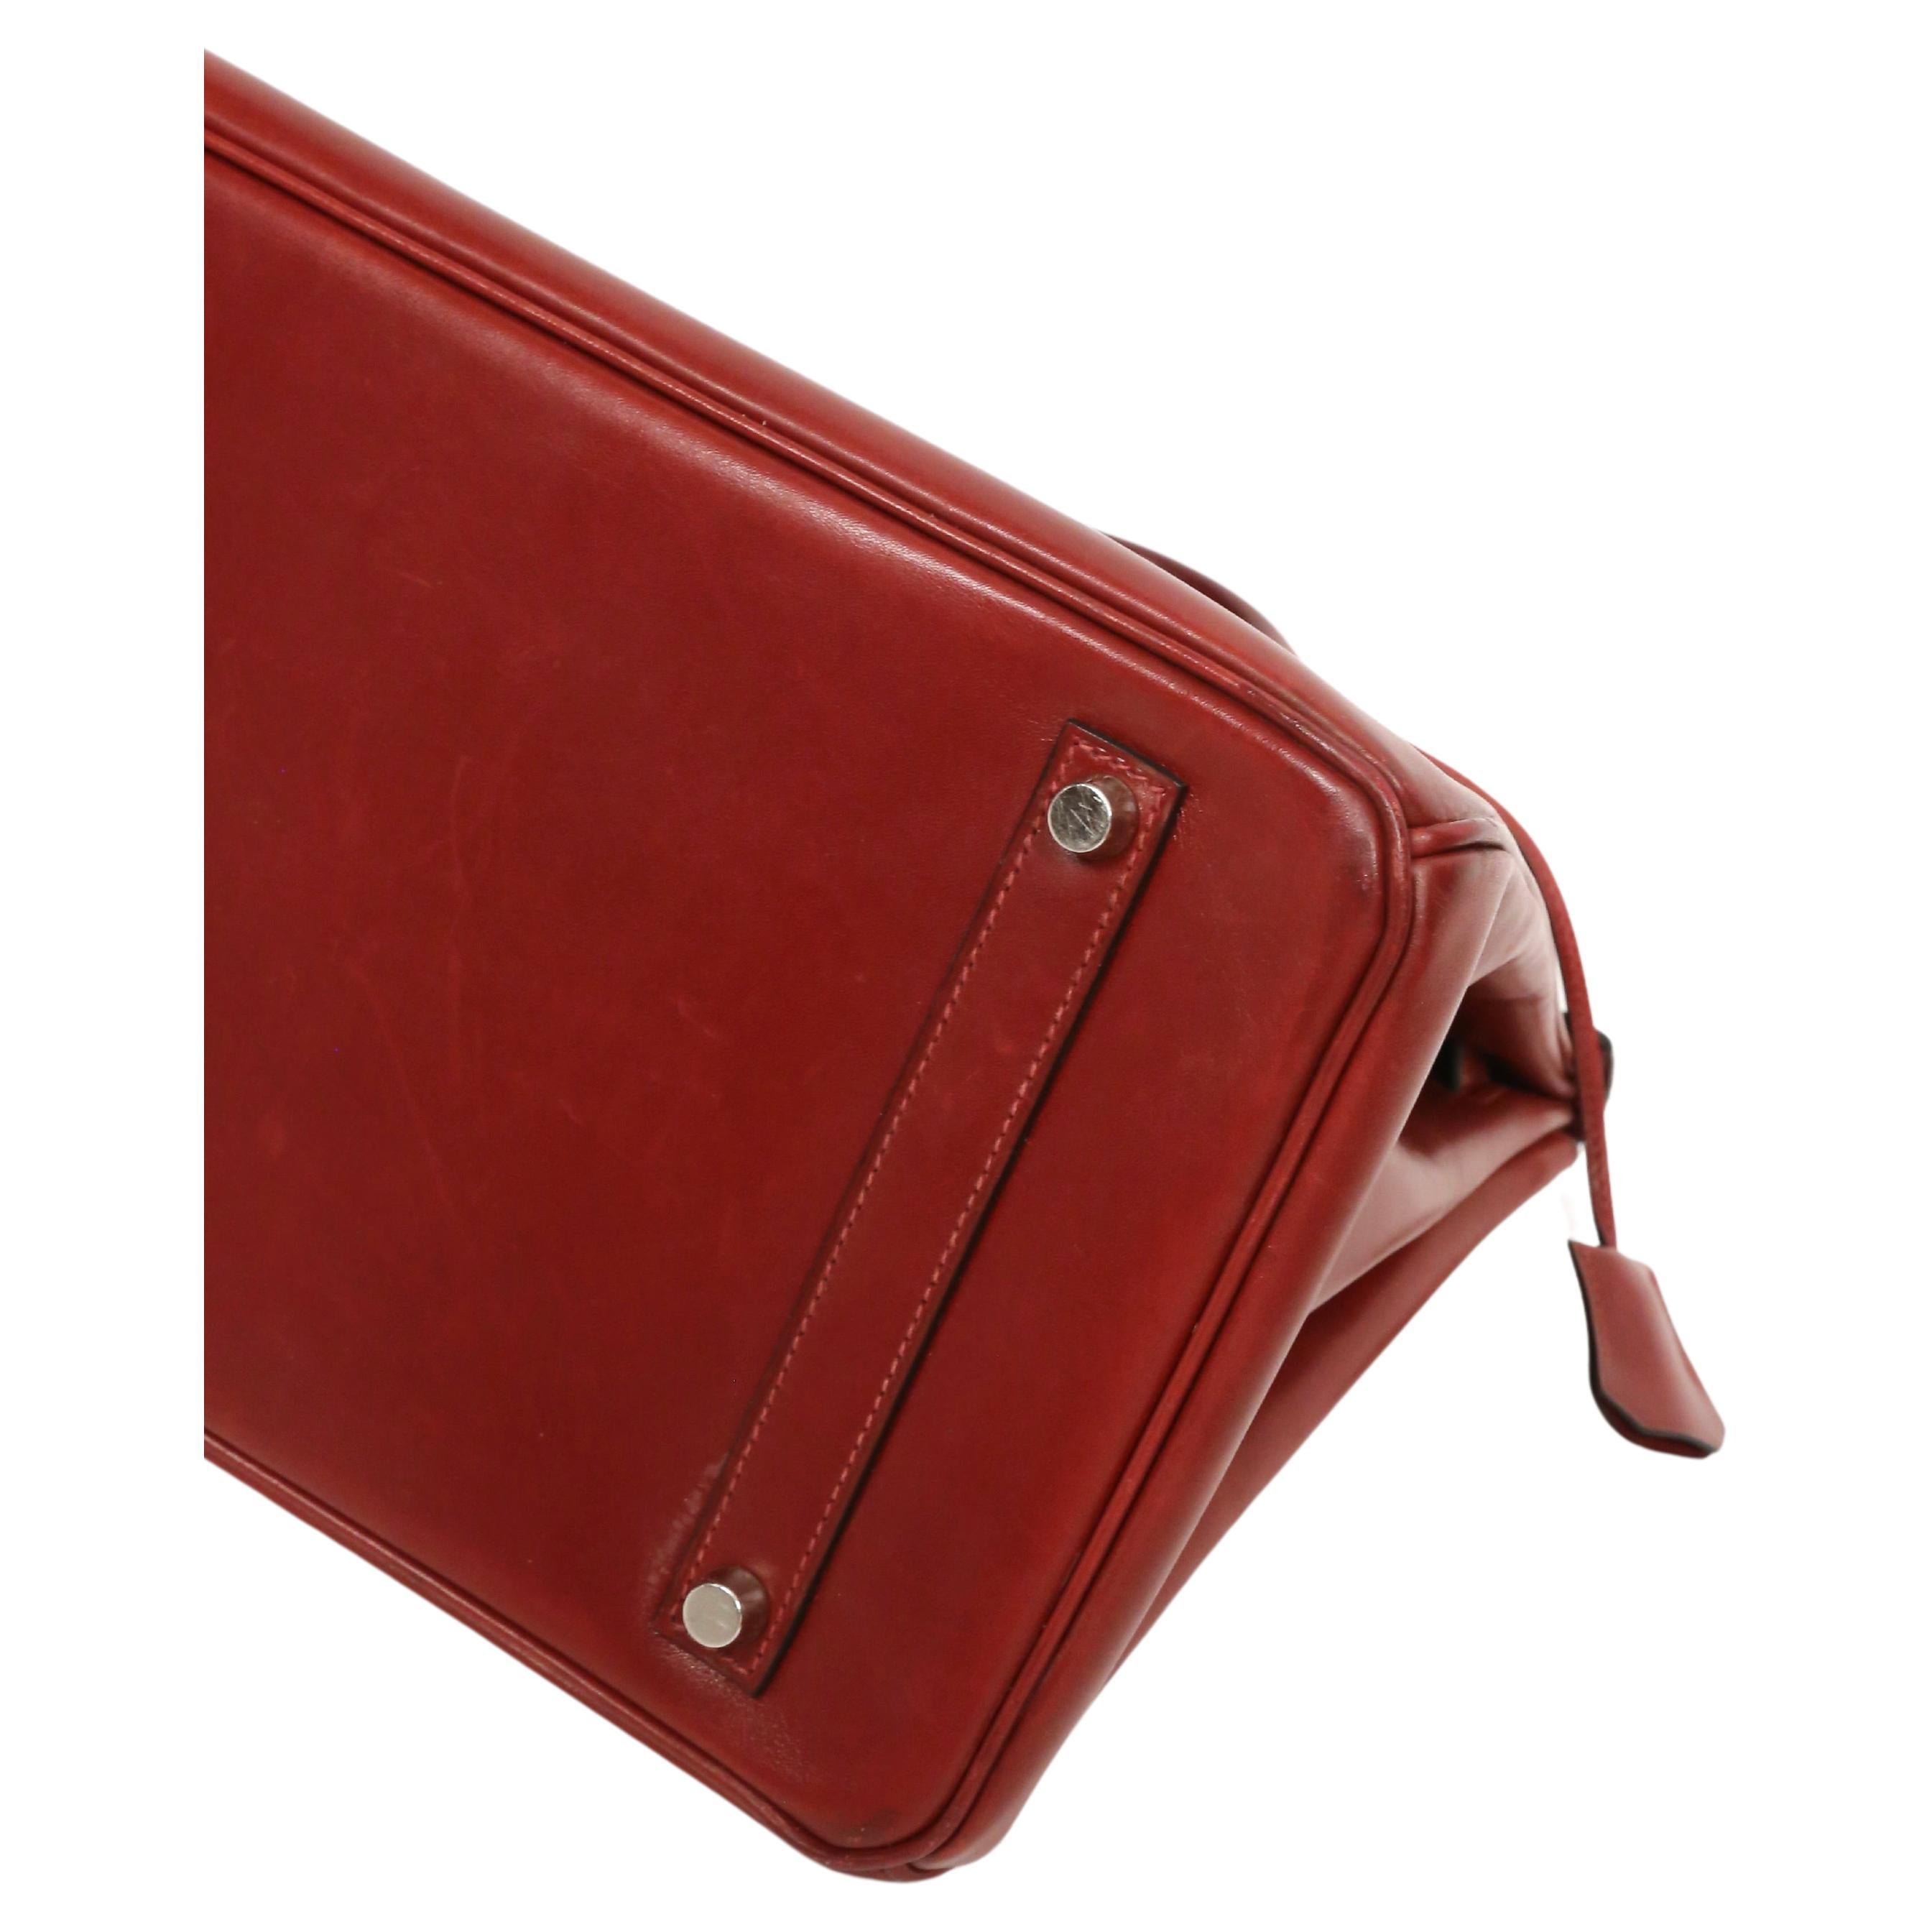 2005 HERMES 35 cm rouge box leather BIRKIN bag 2